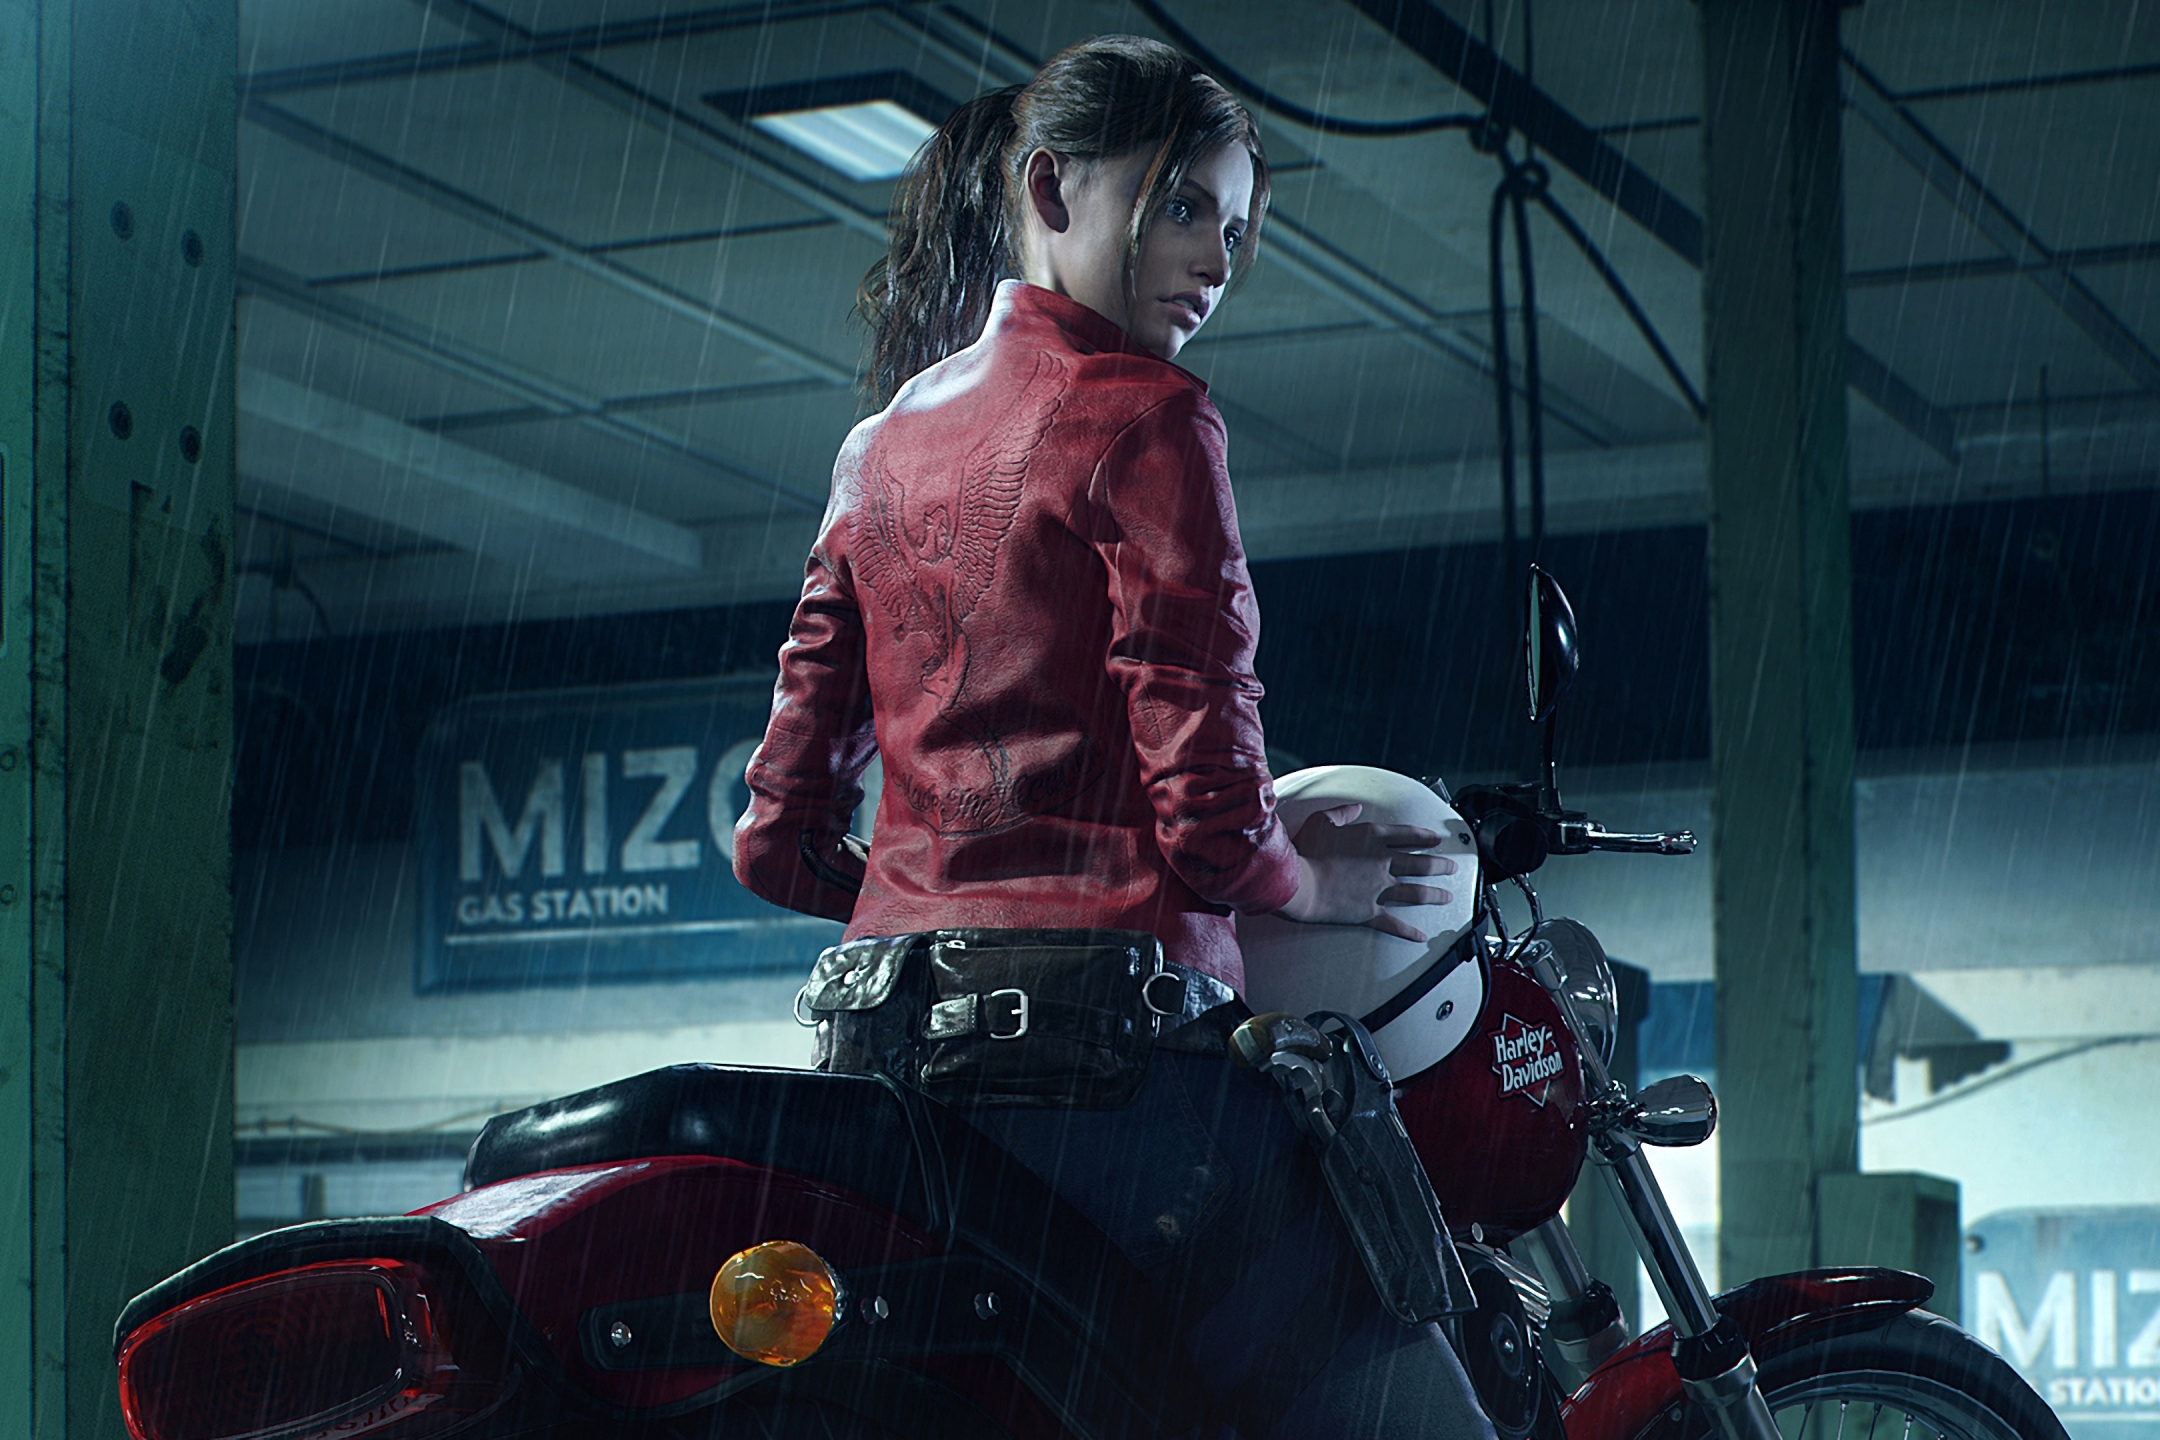 Descarga gratuita de fondo de pantalla para móvil de Harley Davidson, Videojuego, Claire Redfield, Residente Demoníaco, Resident Evil 2 (2019).